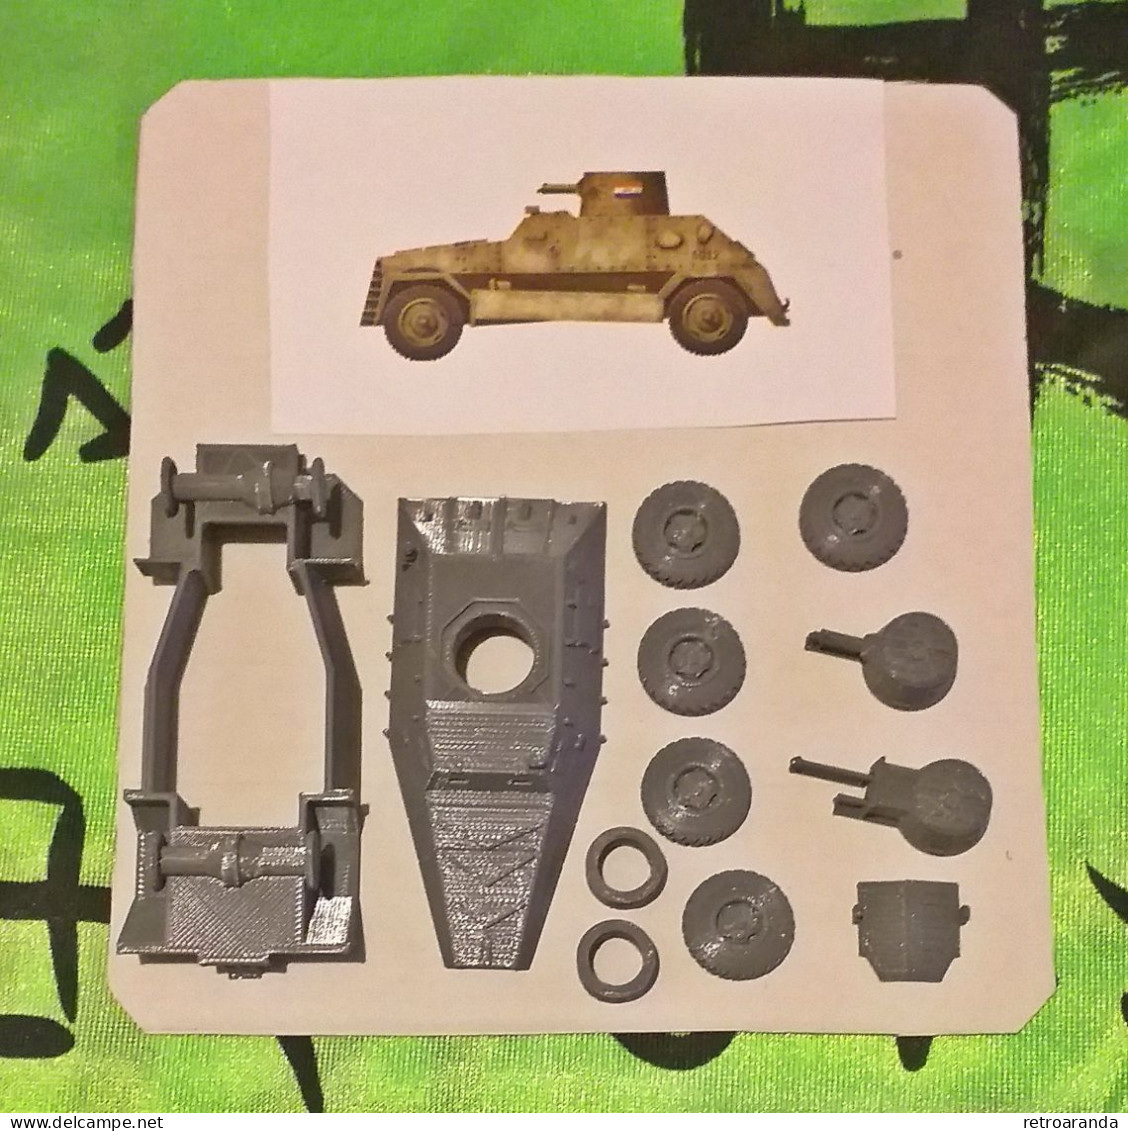 Kit maqueta para montar y pintar - Vehículo militar - Marmon herrington Mk II .